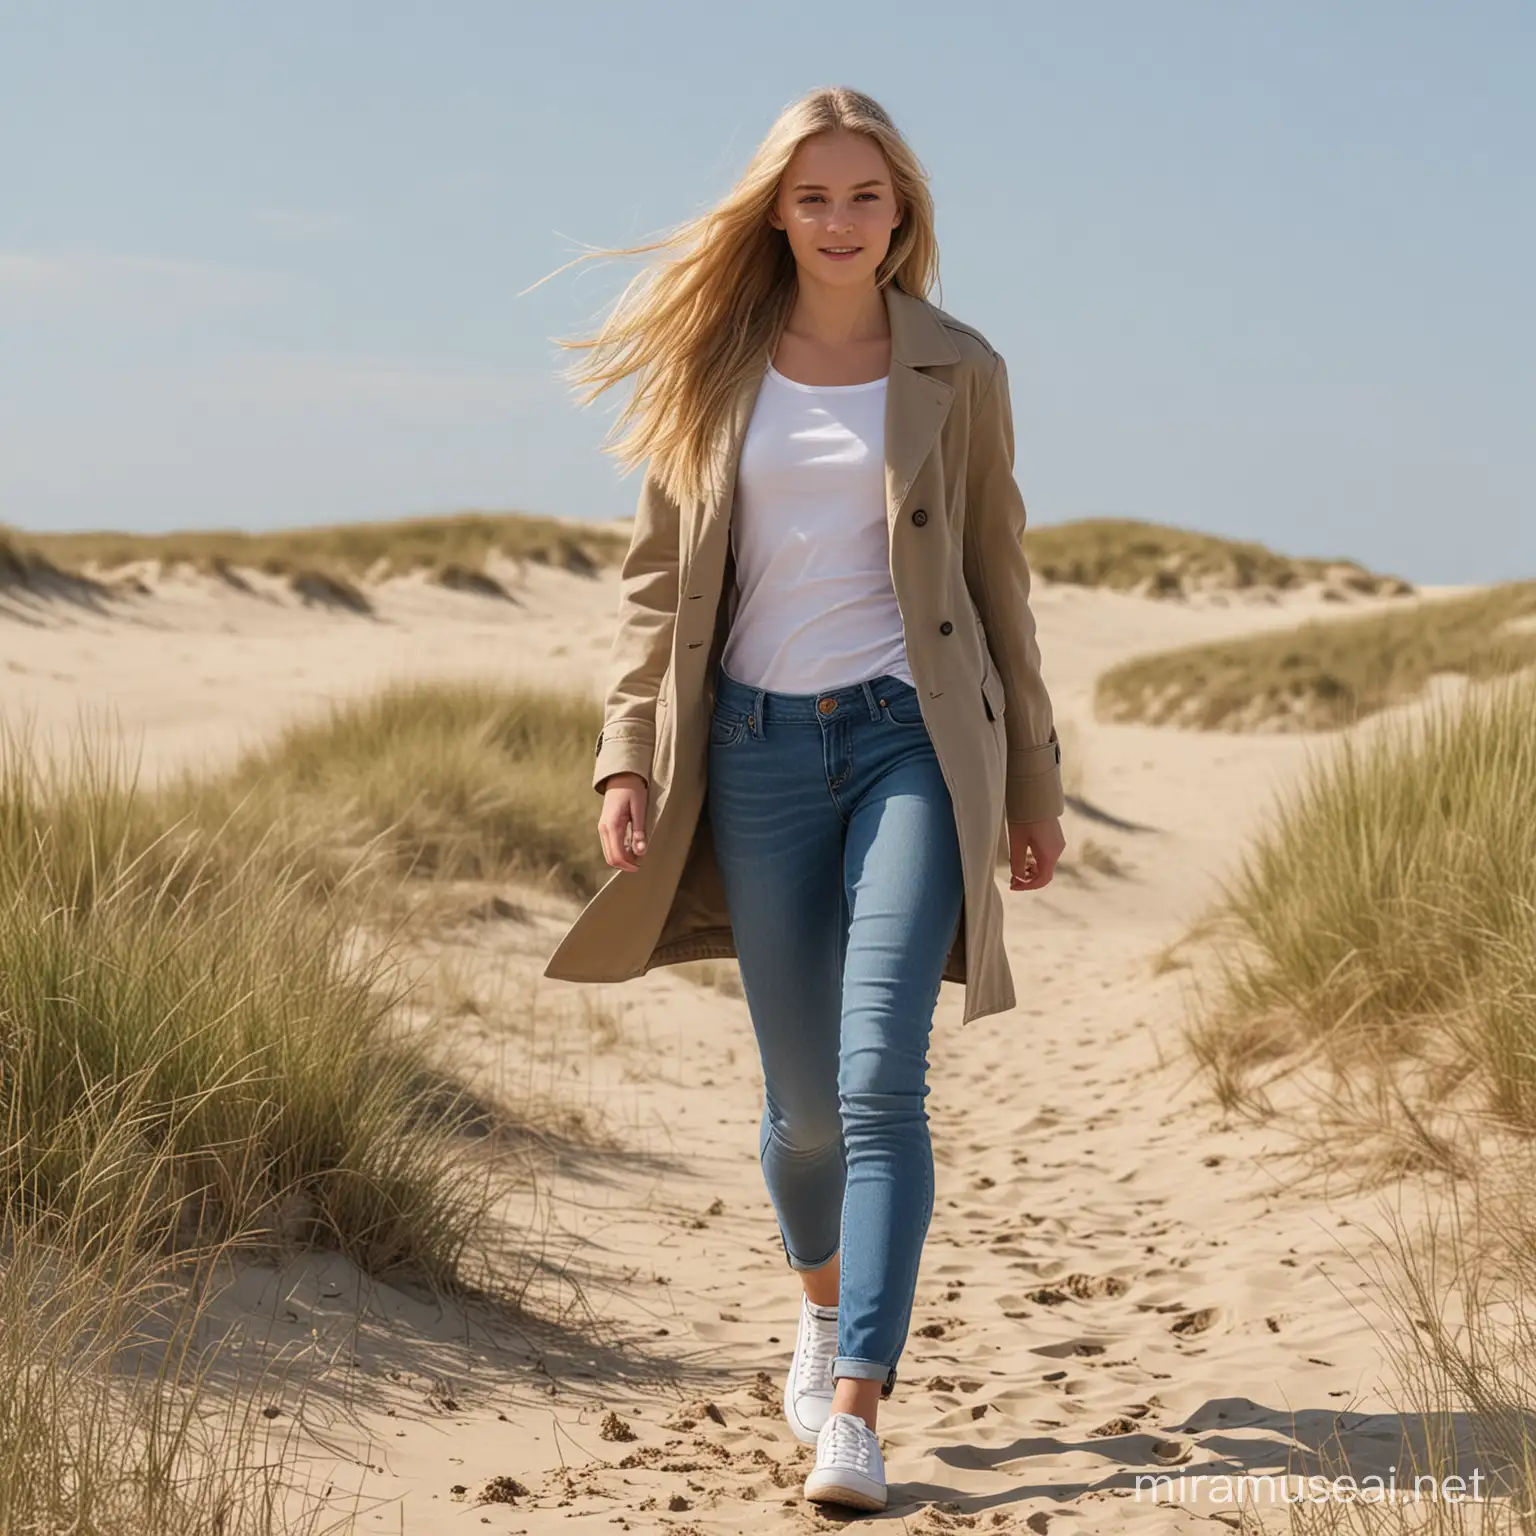 European Teenage Girl Walking in Sunny Sea and Dune Landscape